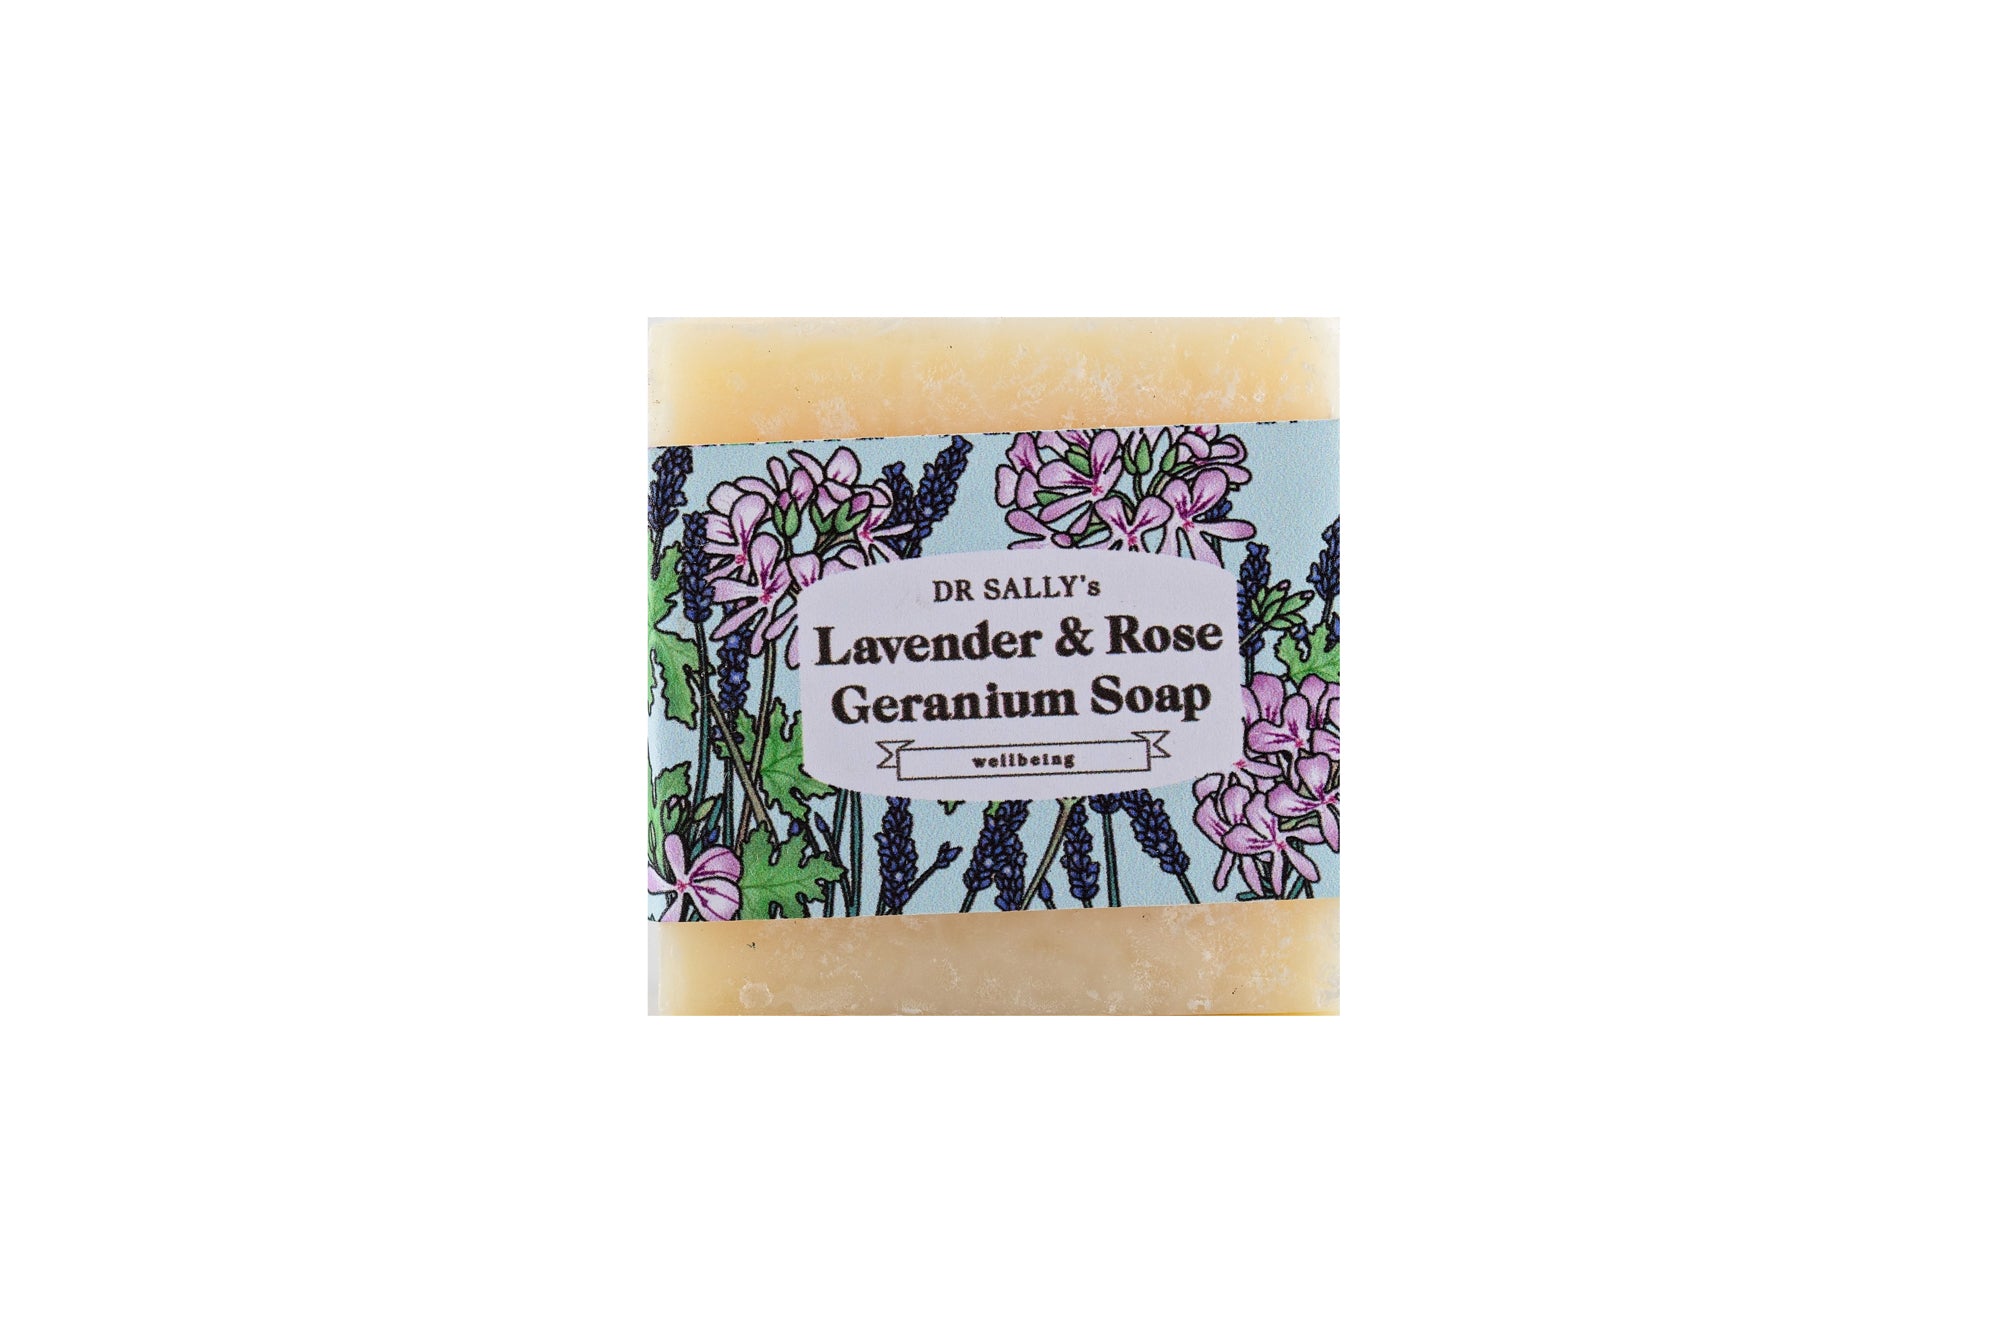 Dr Sally's Lavender & Rose Geranium Soap